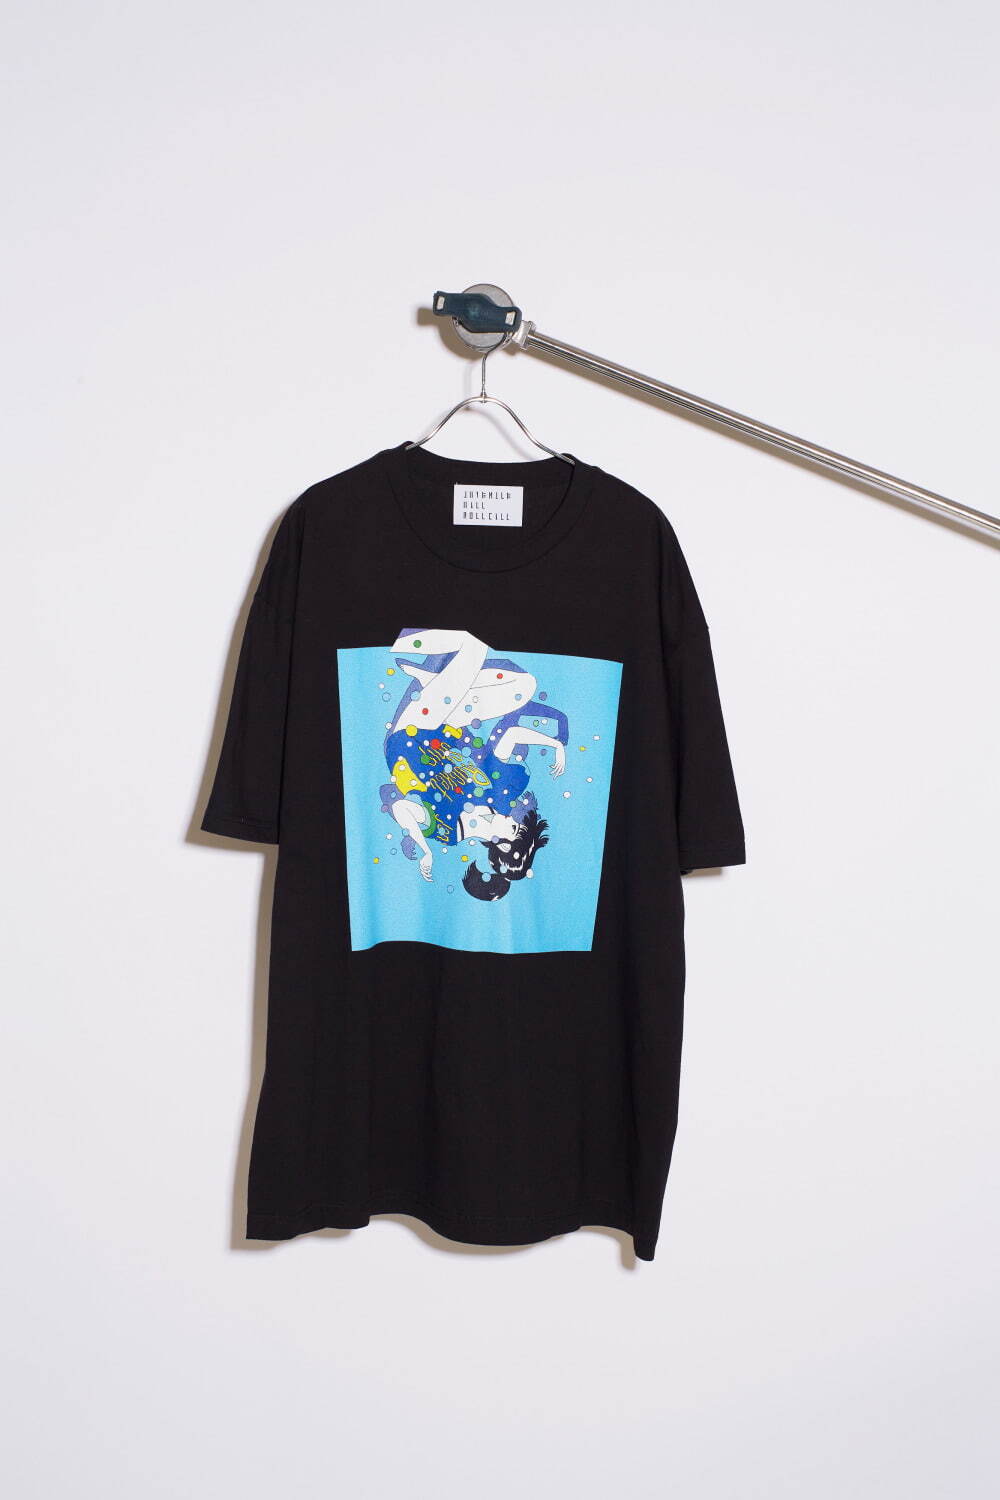 Tシャツ style no. DM2024-001SST 
13,000円